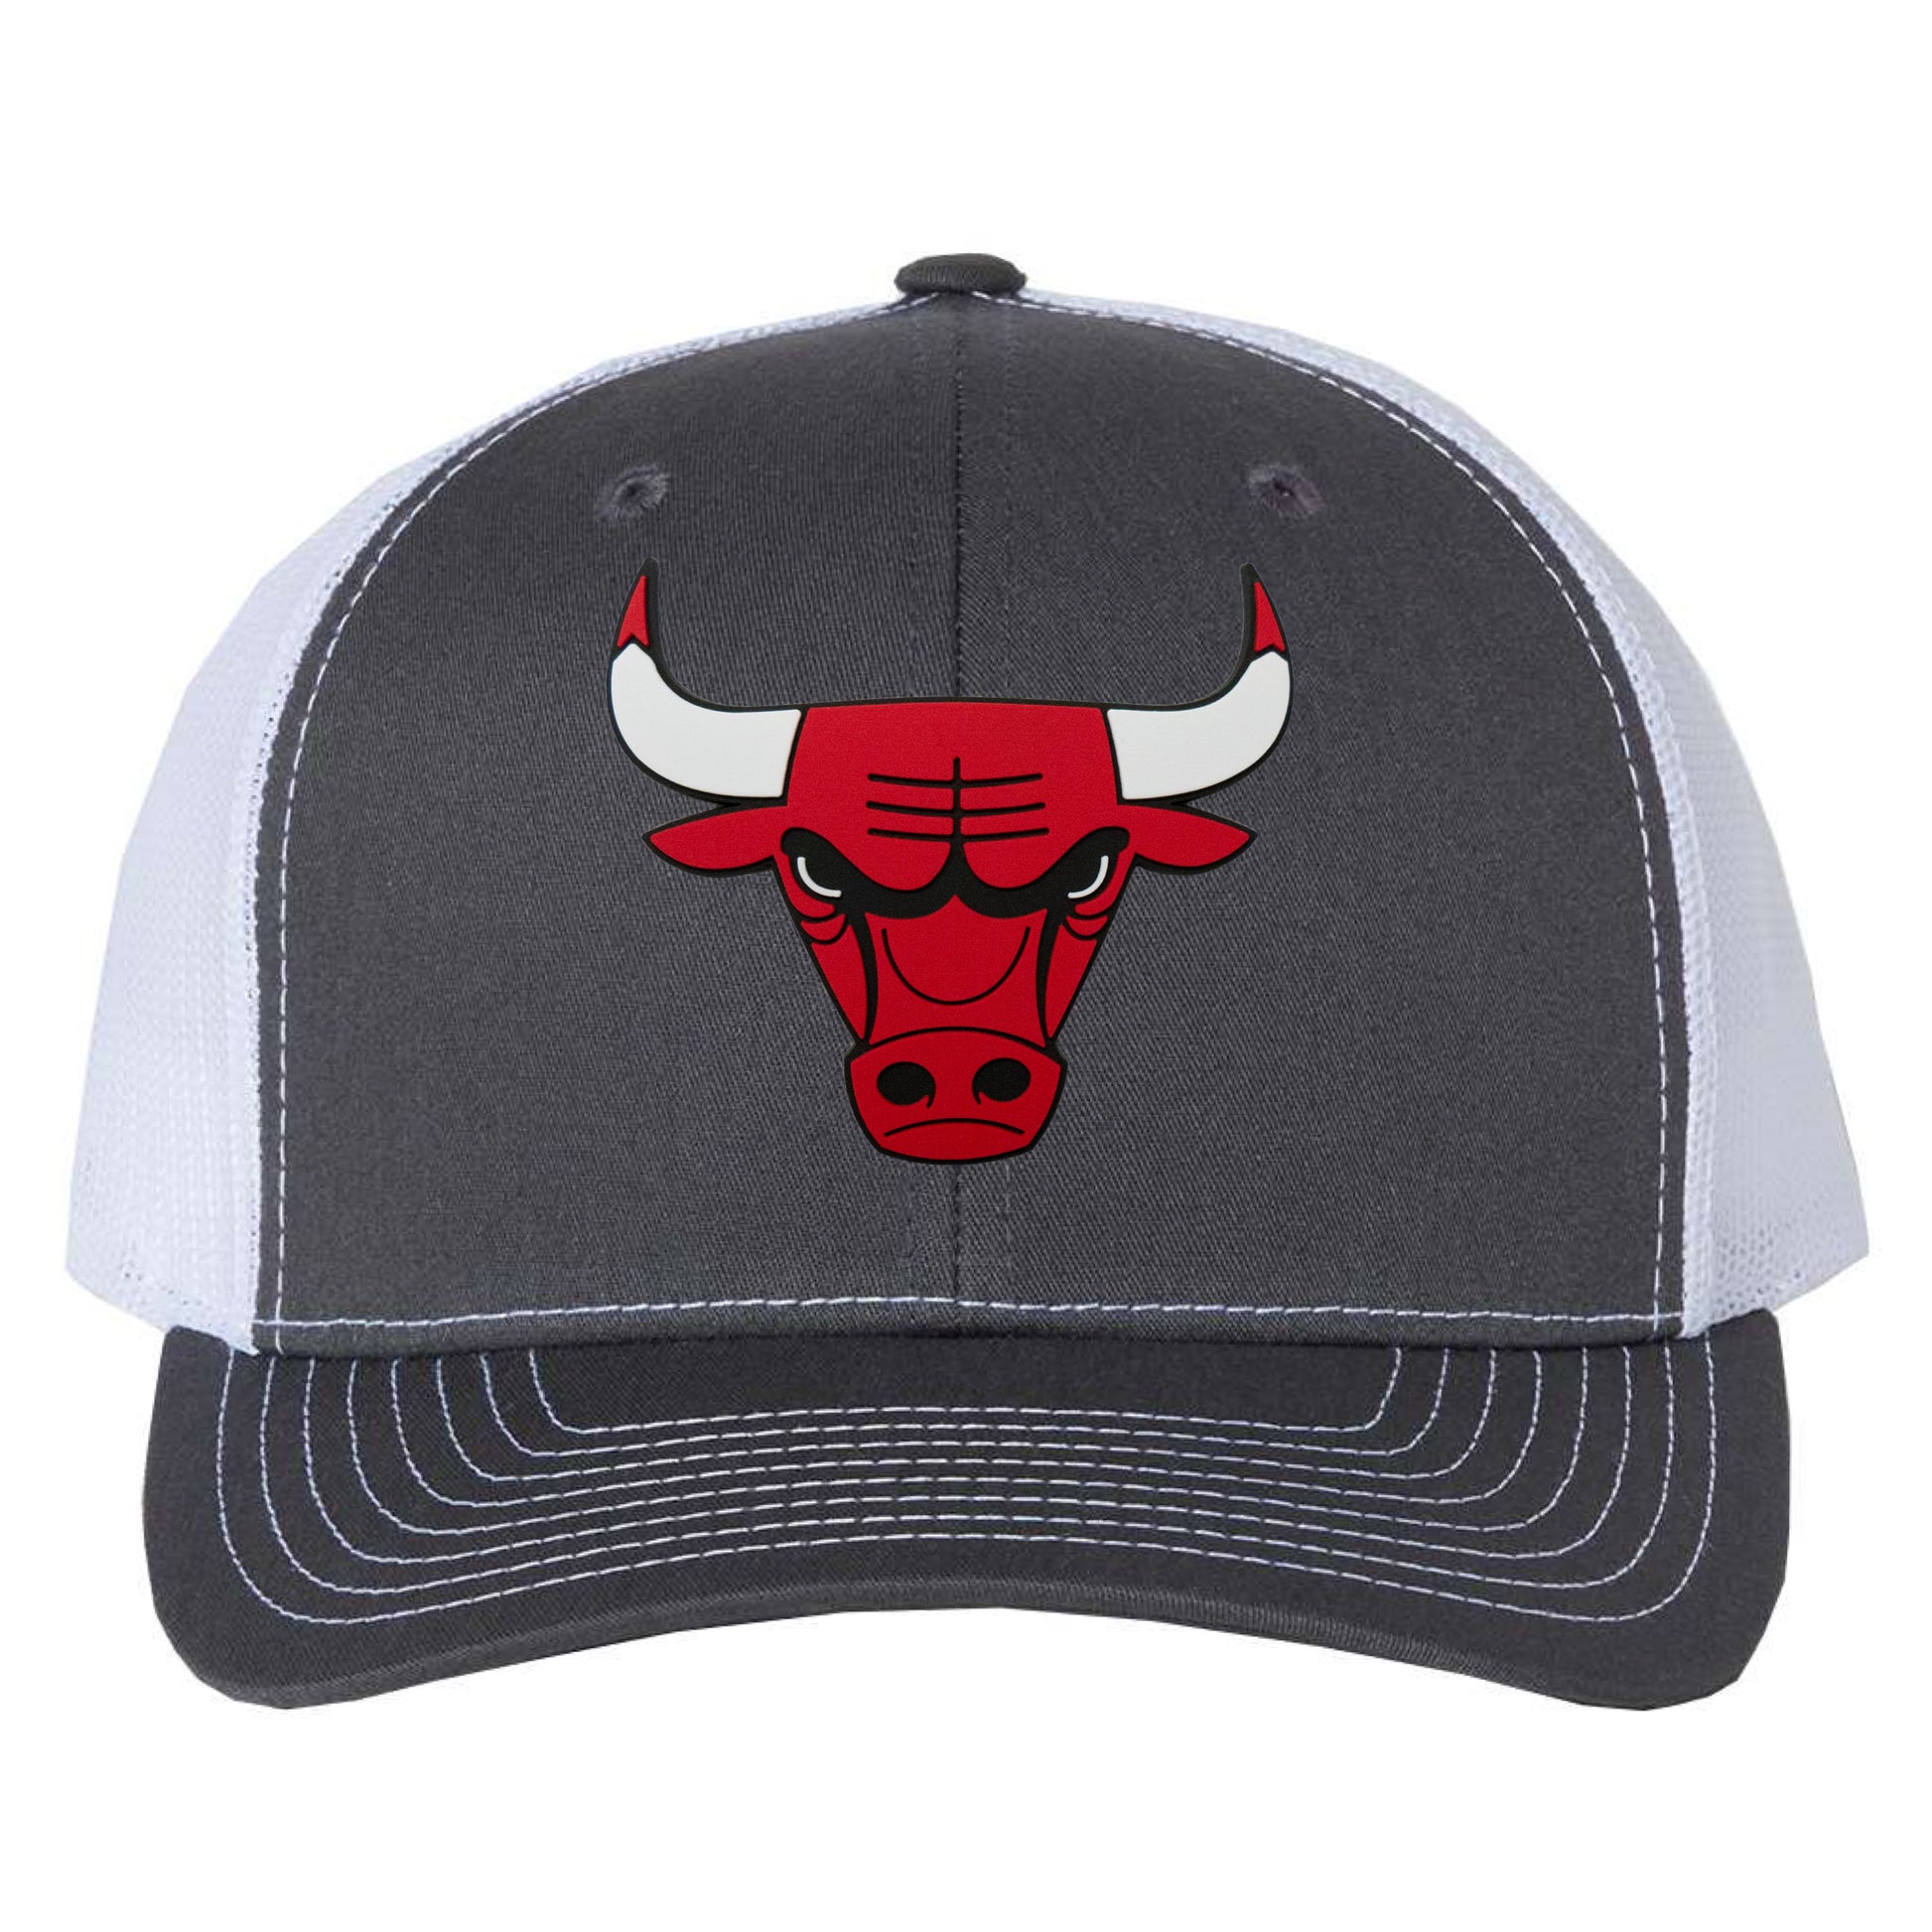 Chicago Bulls 3D Patch Snapback Trucker Hat- Charcoal/ White - Ten Gallon Hat Co.